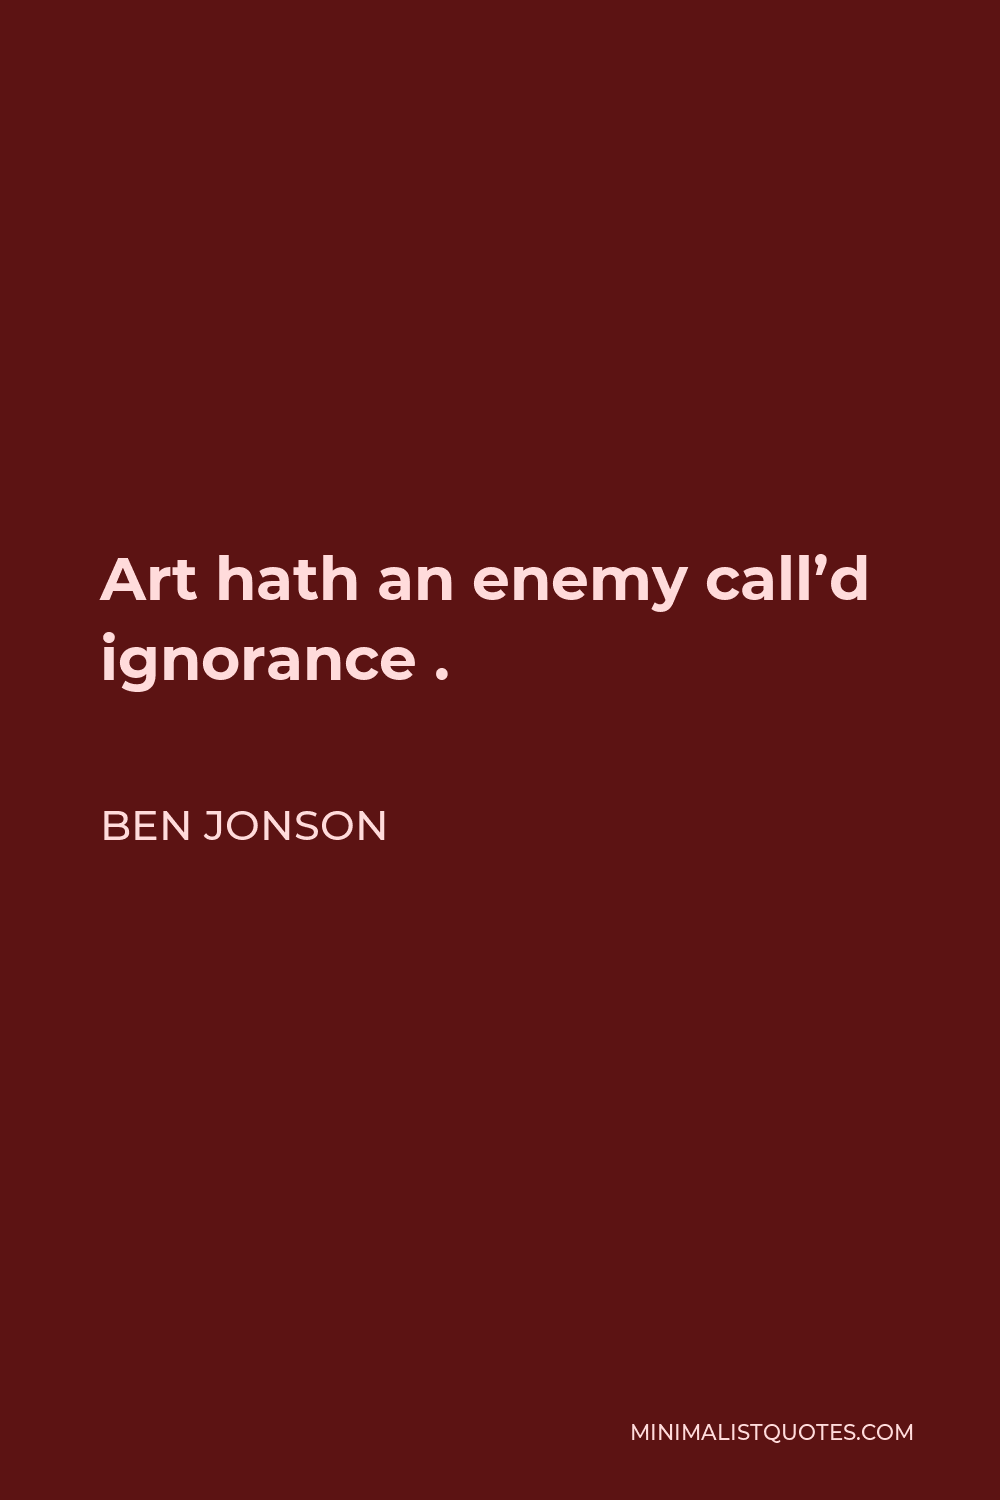 Ben Jonson Quote - Art hath an enemy call’d ignorance .